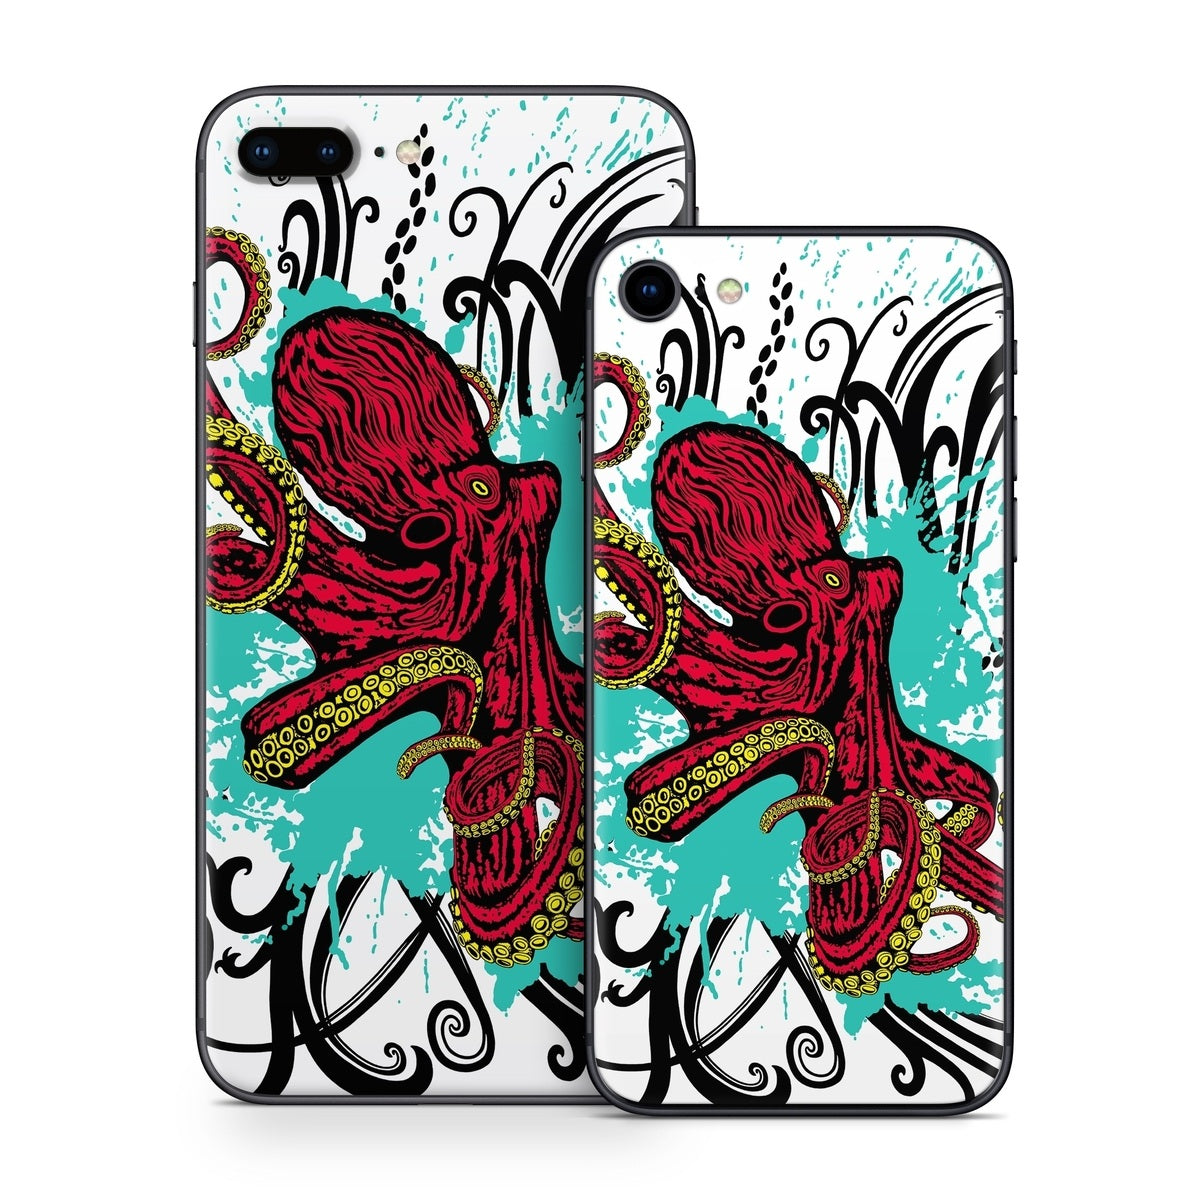 Octopus - Apple iPhone 8 Skin